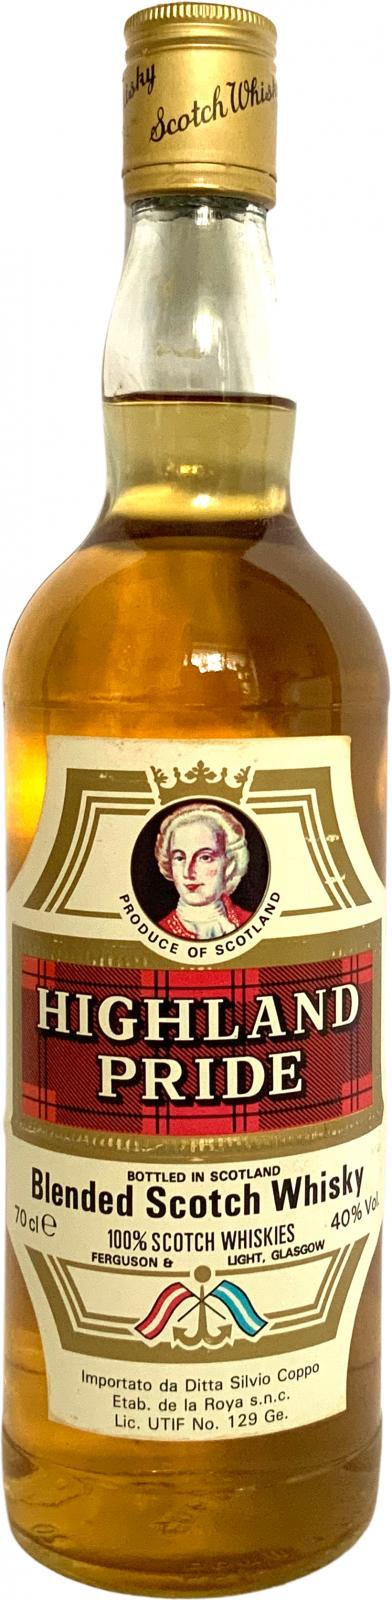 Highland Pride Blended Scotch Whisky Ditta Silvio Coppo 40% 700ml